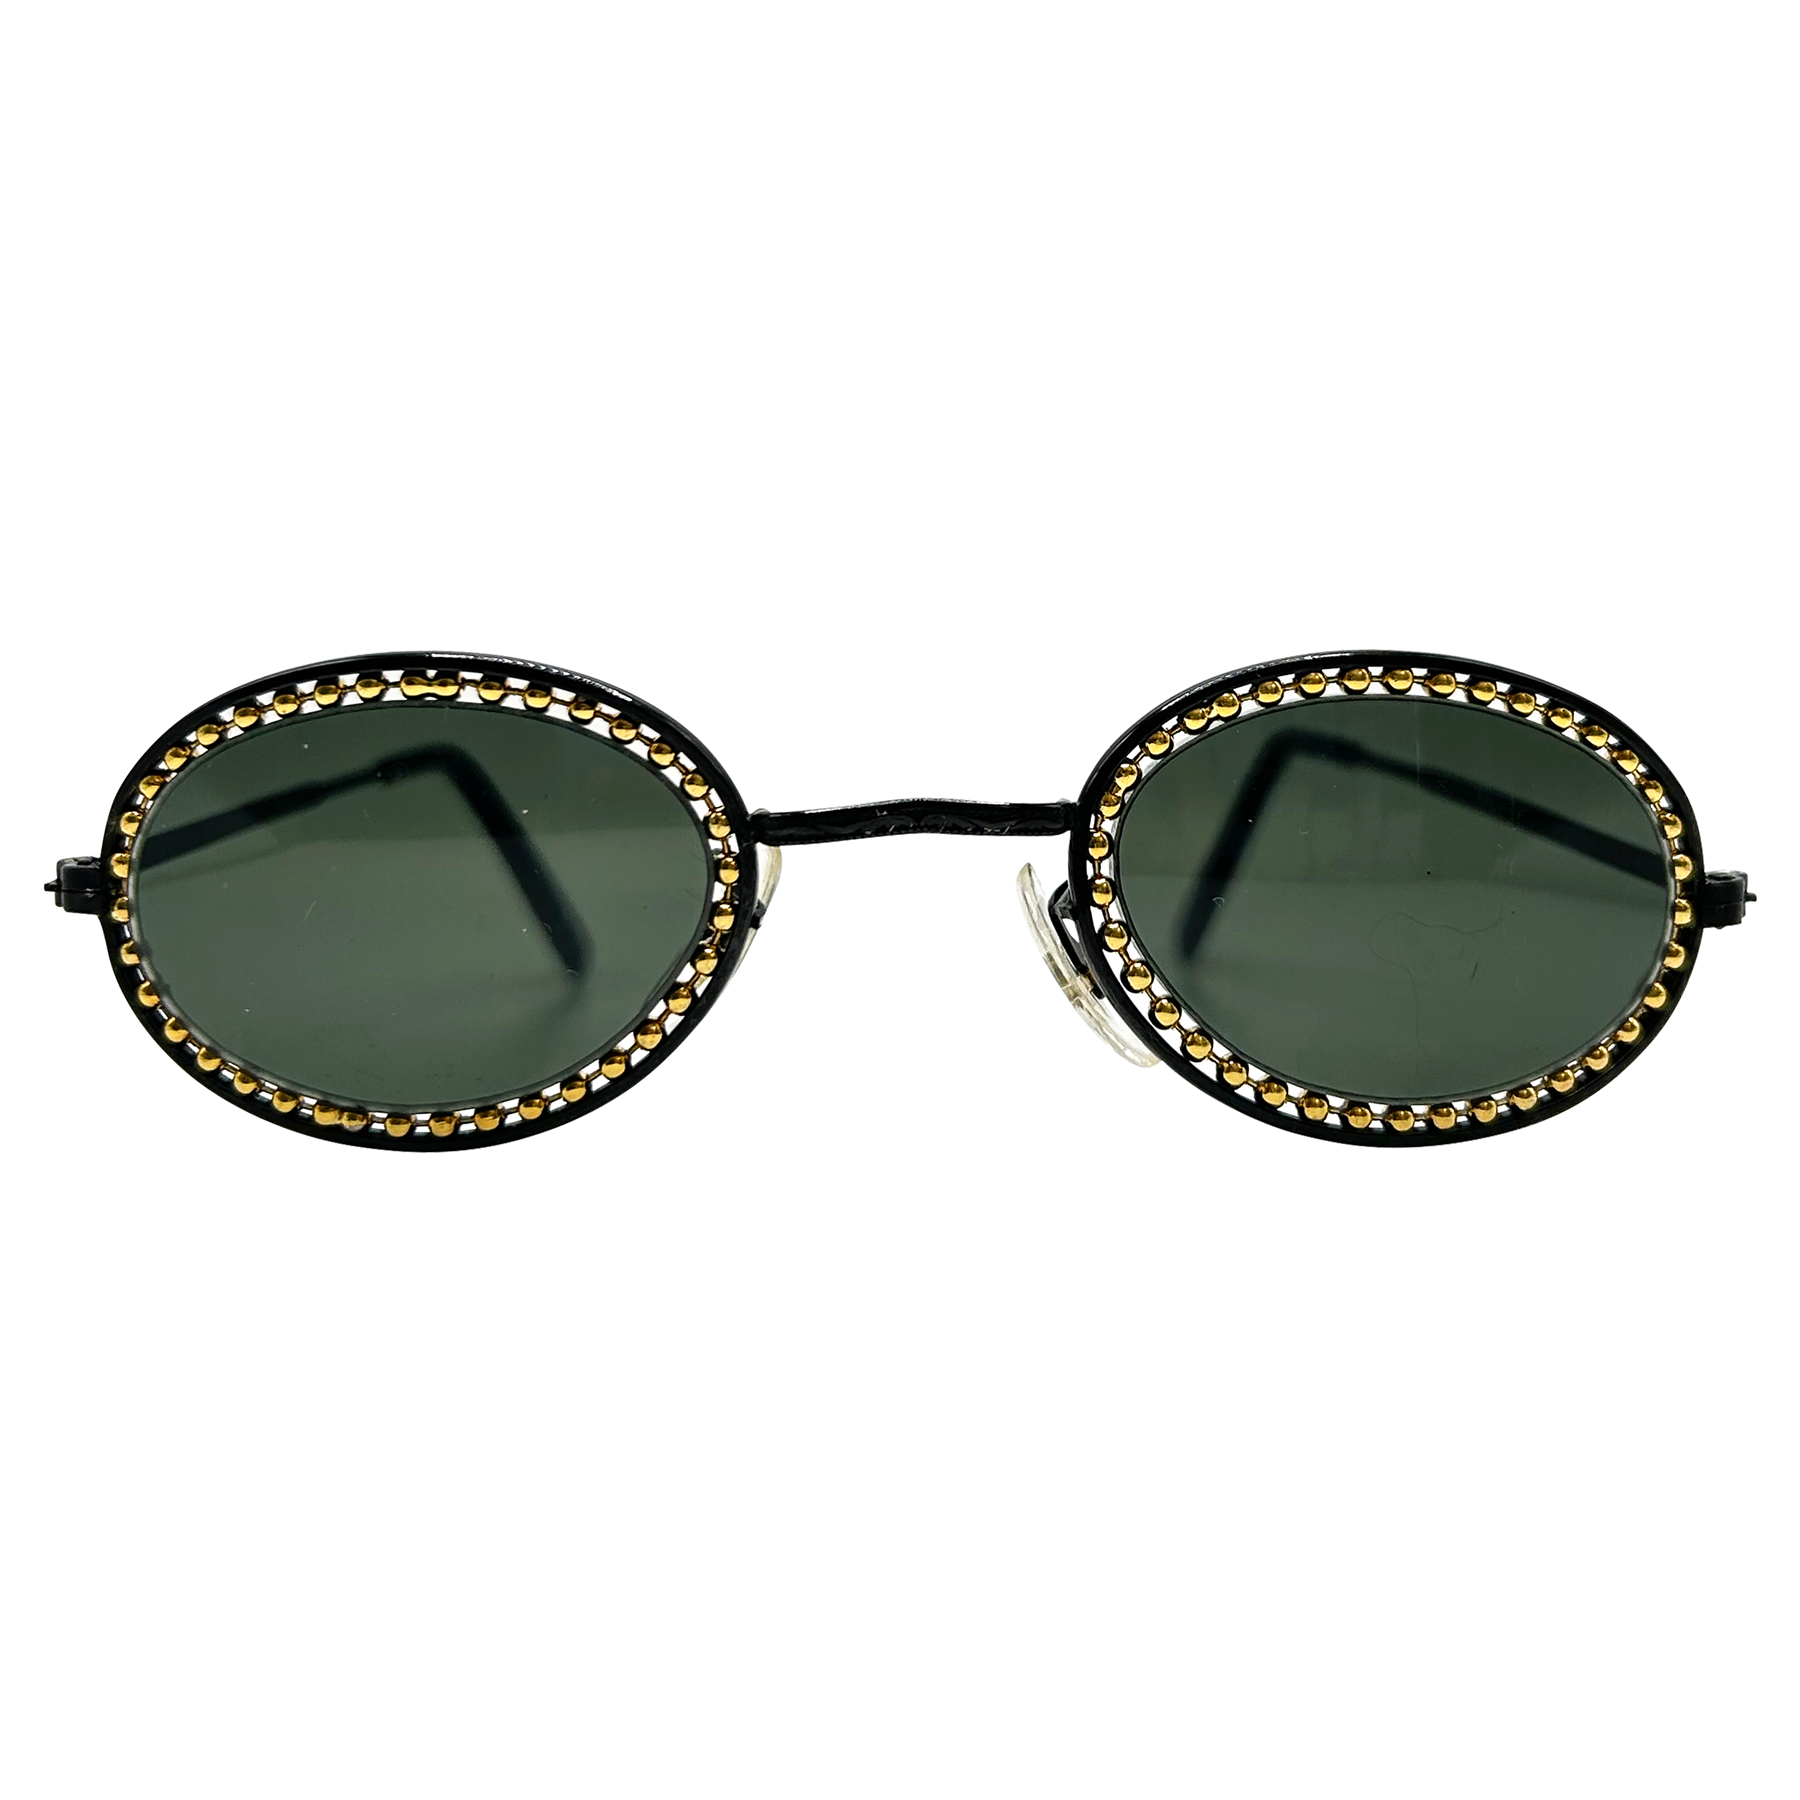 Glasses Chanel - Branded frame black round eyeglasses - CH3394C534